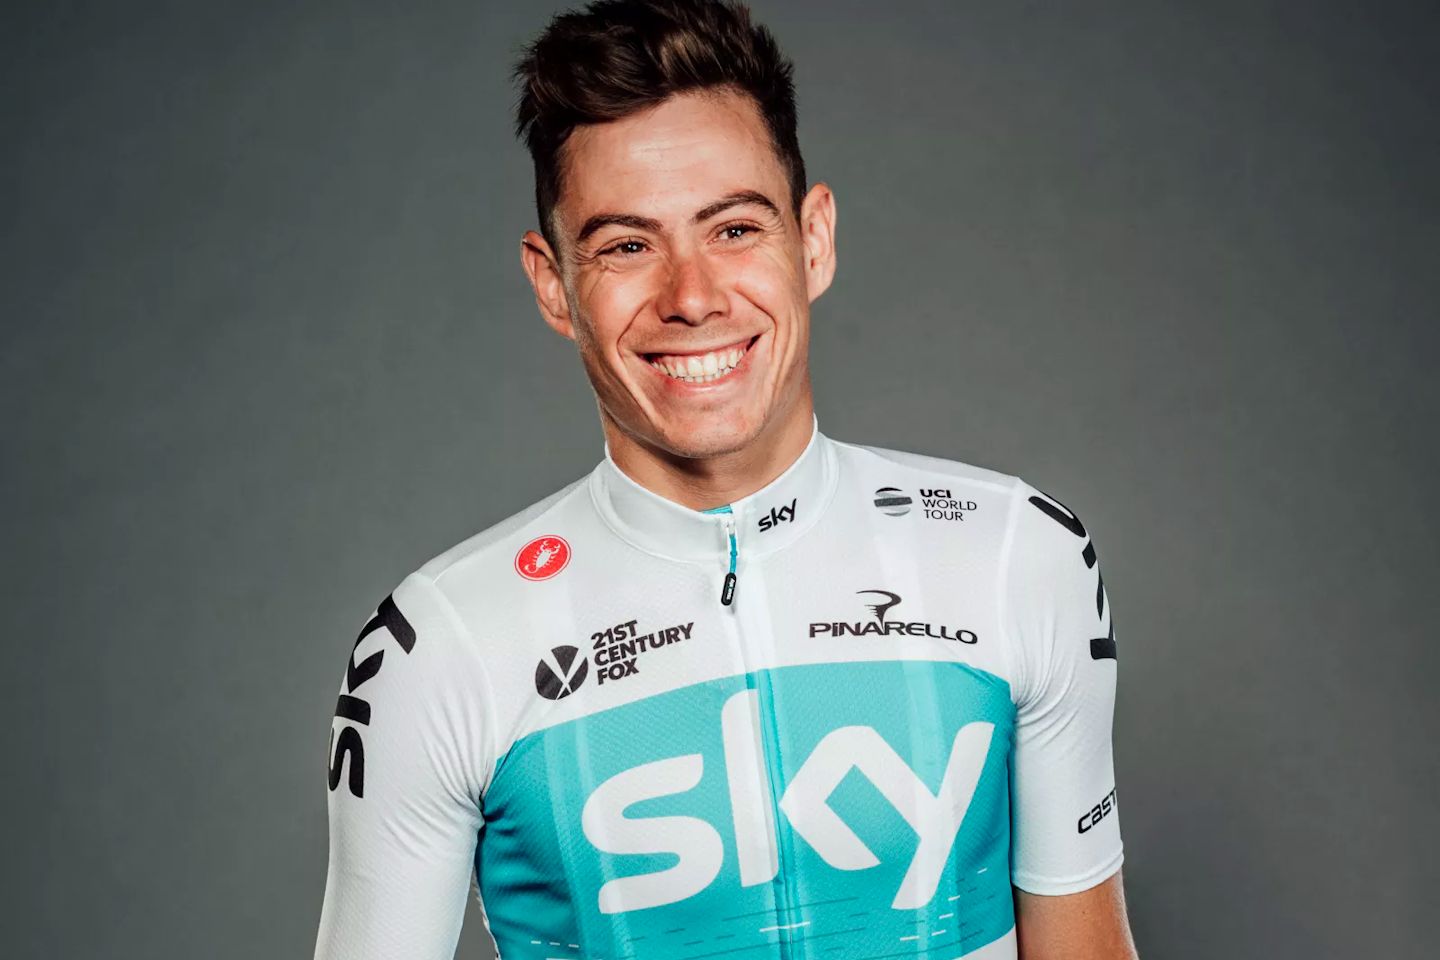 Vuelta a Andalucia 2018: etap 5. Wellens zwycięzcą wyścigu, etap dla de la Cruza